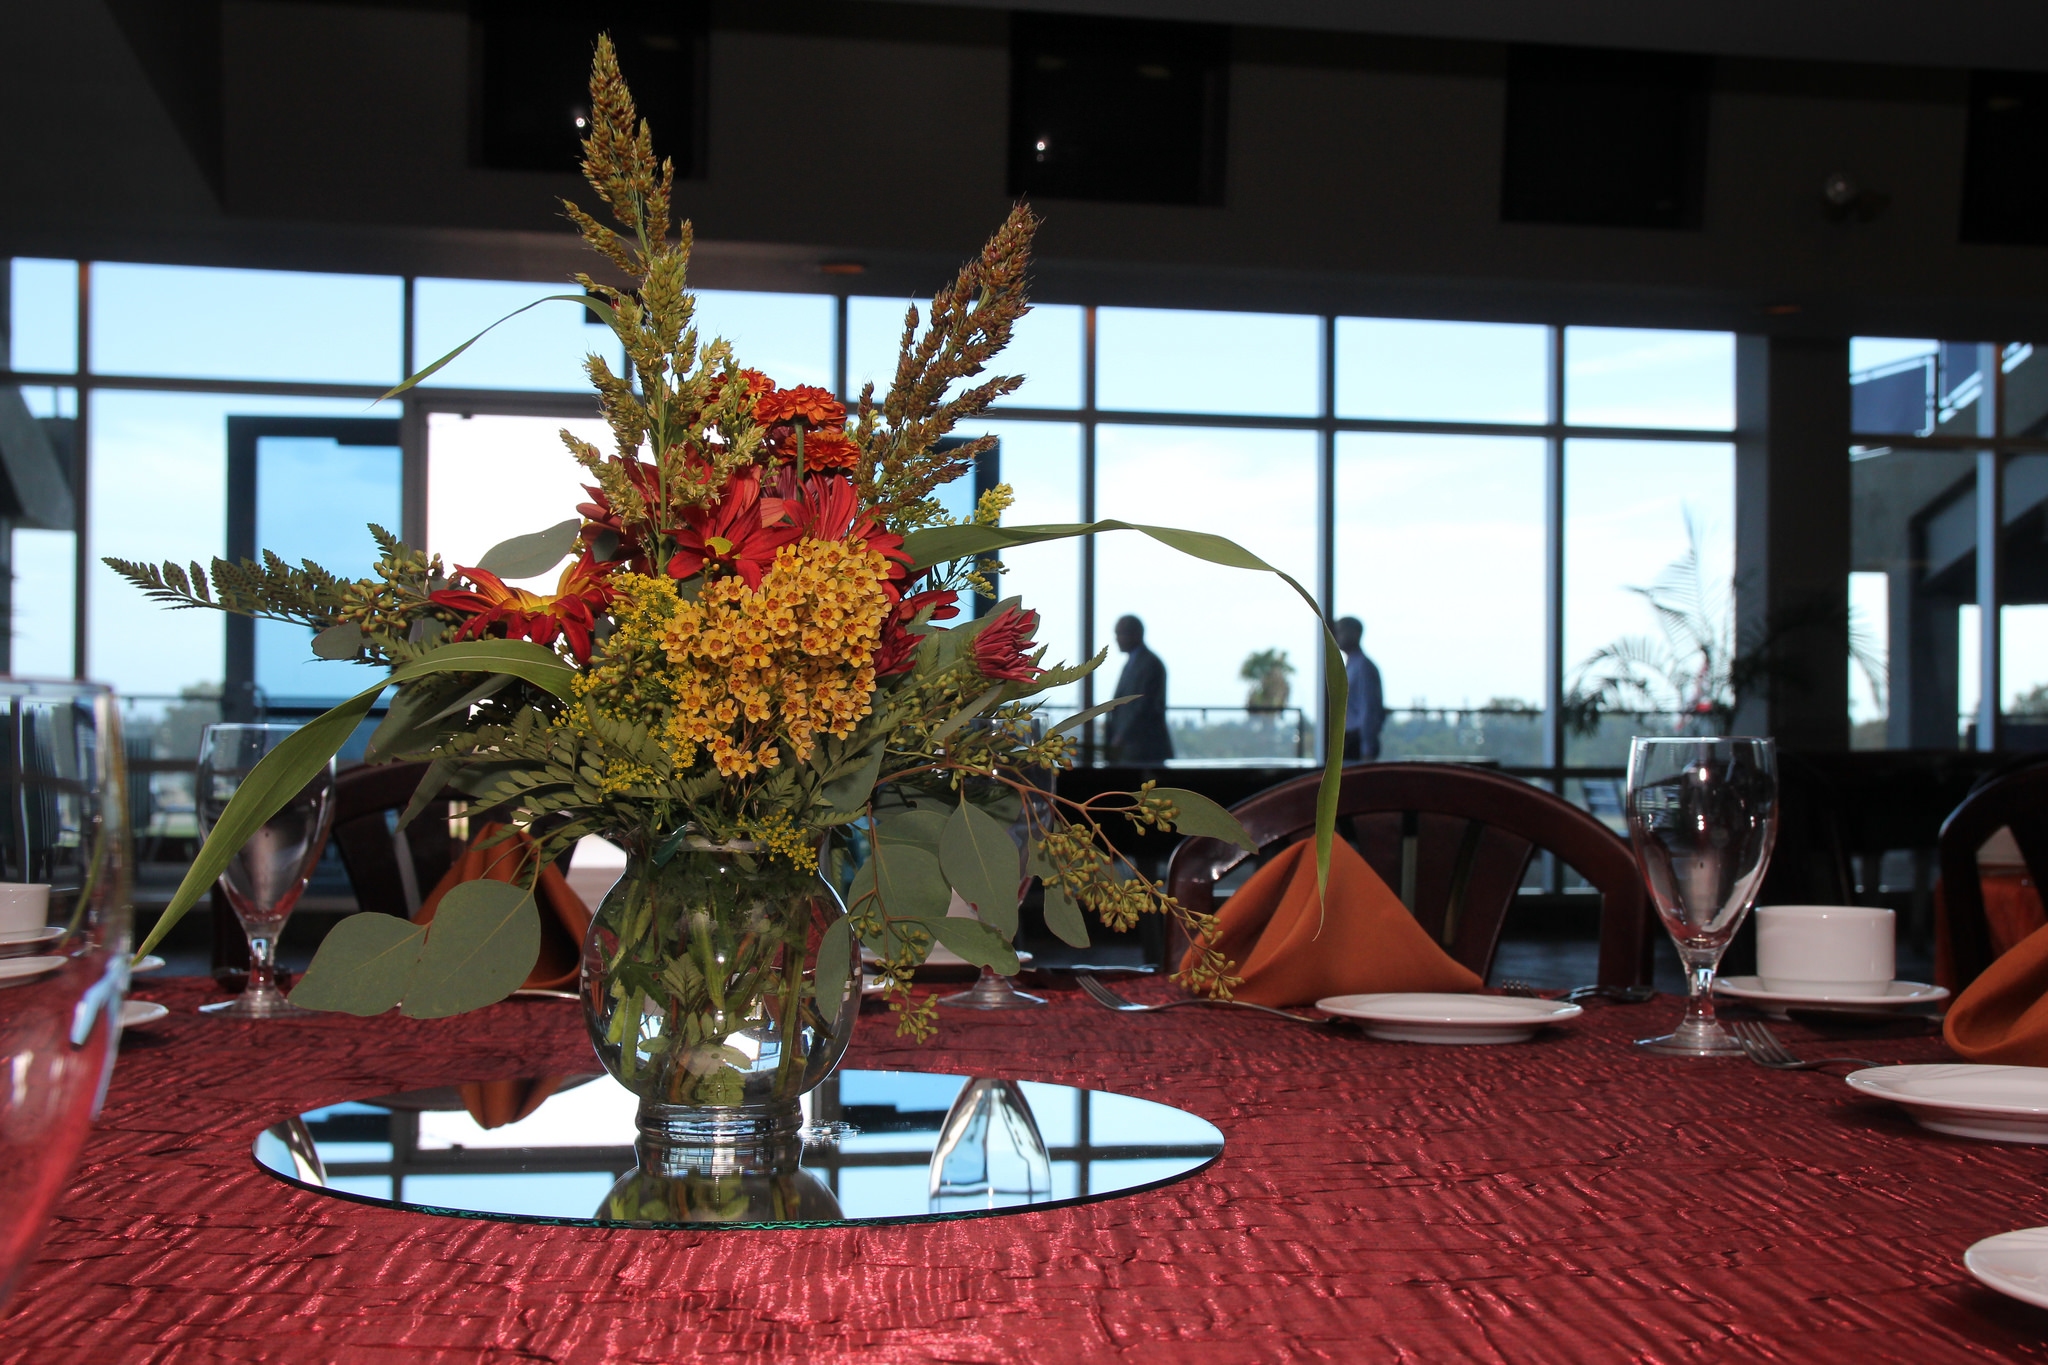 Table with large floral arrangement